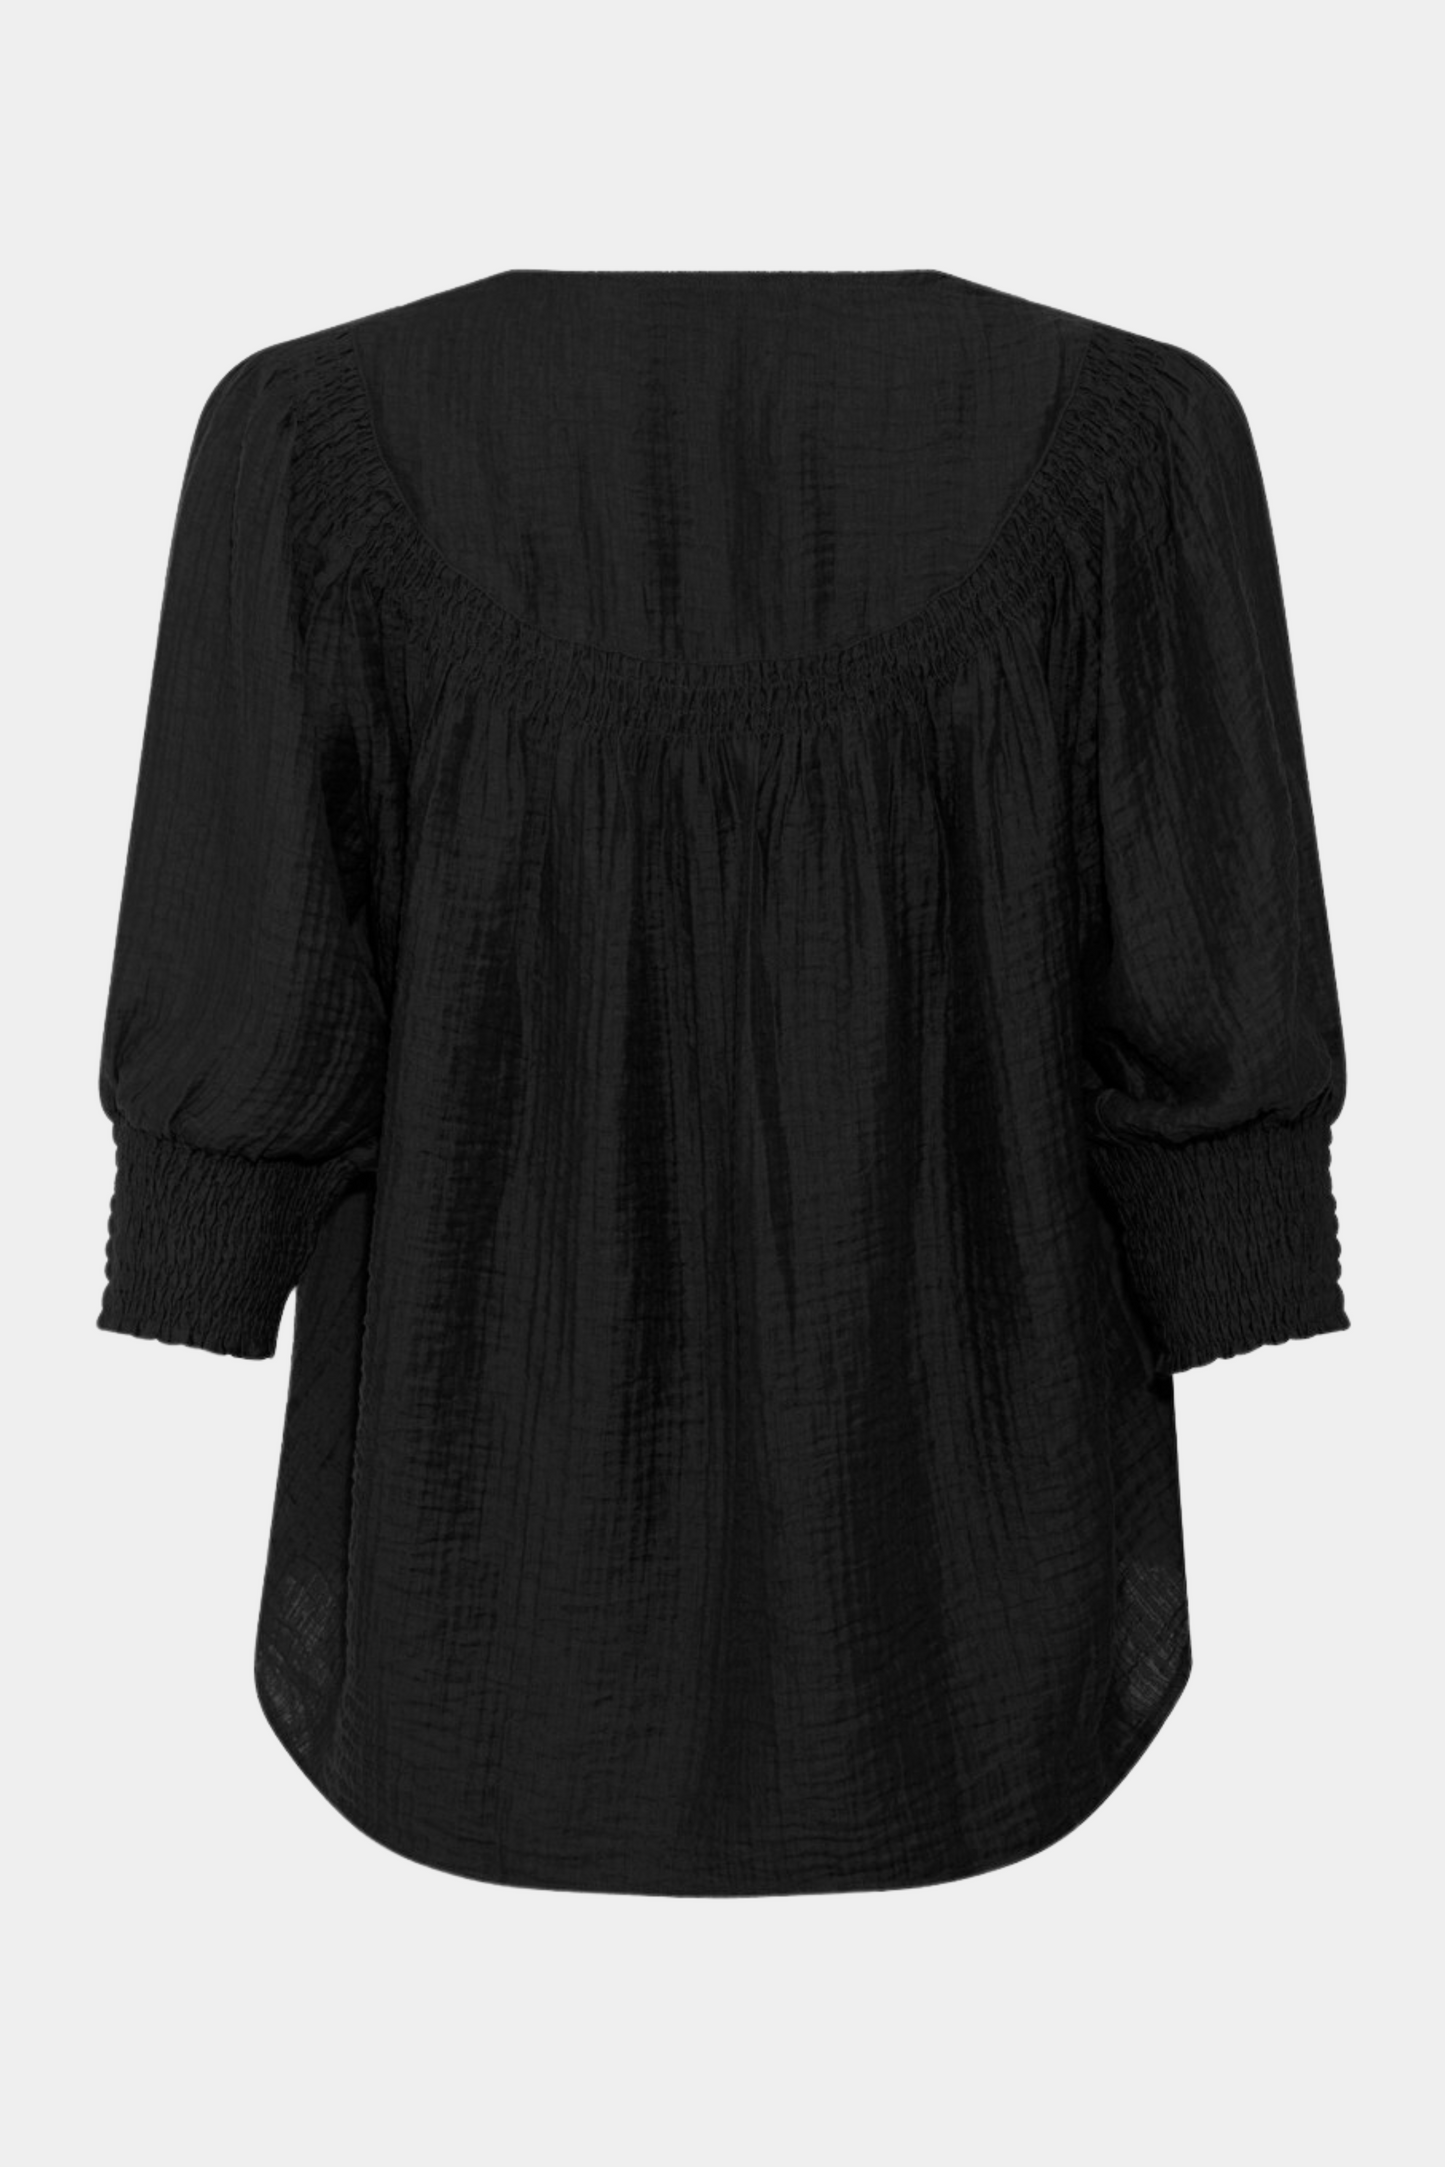 Nayla blouse, black